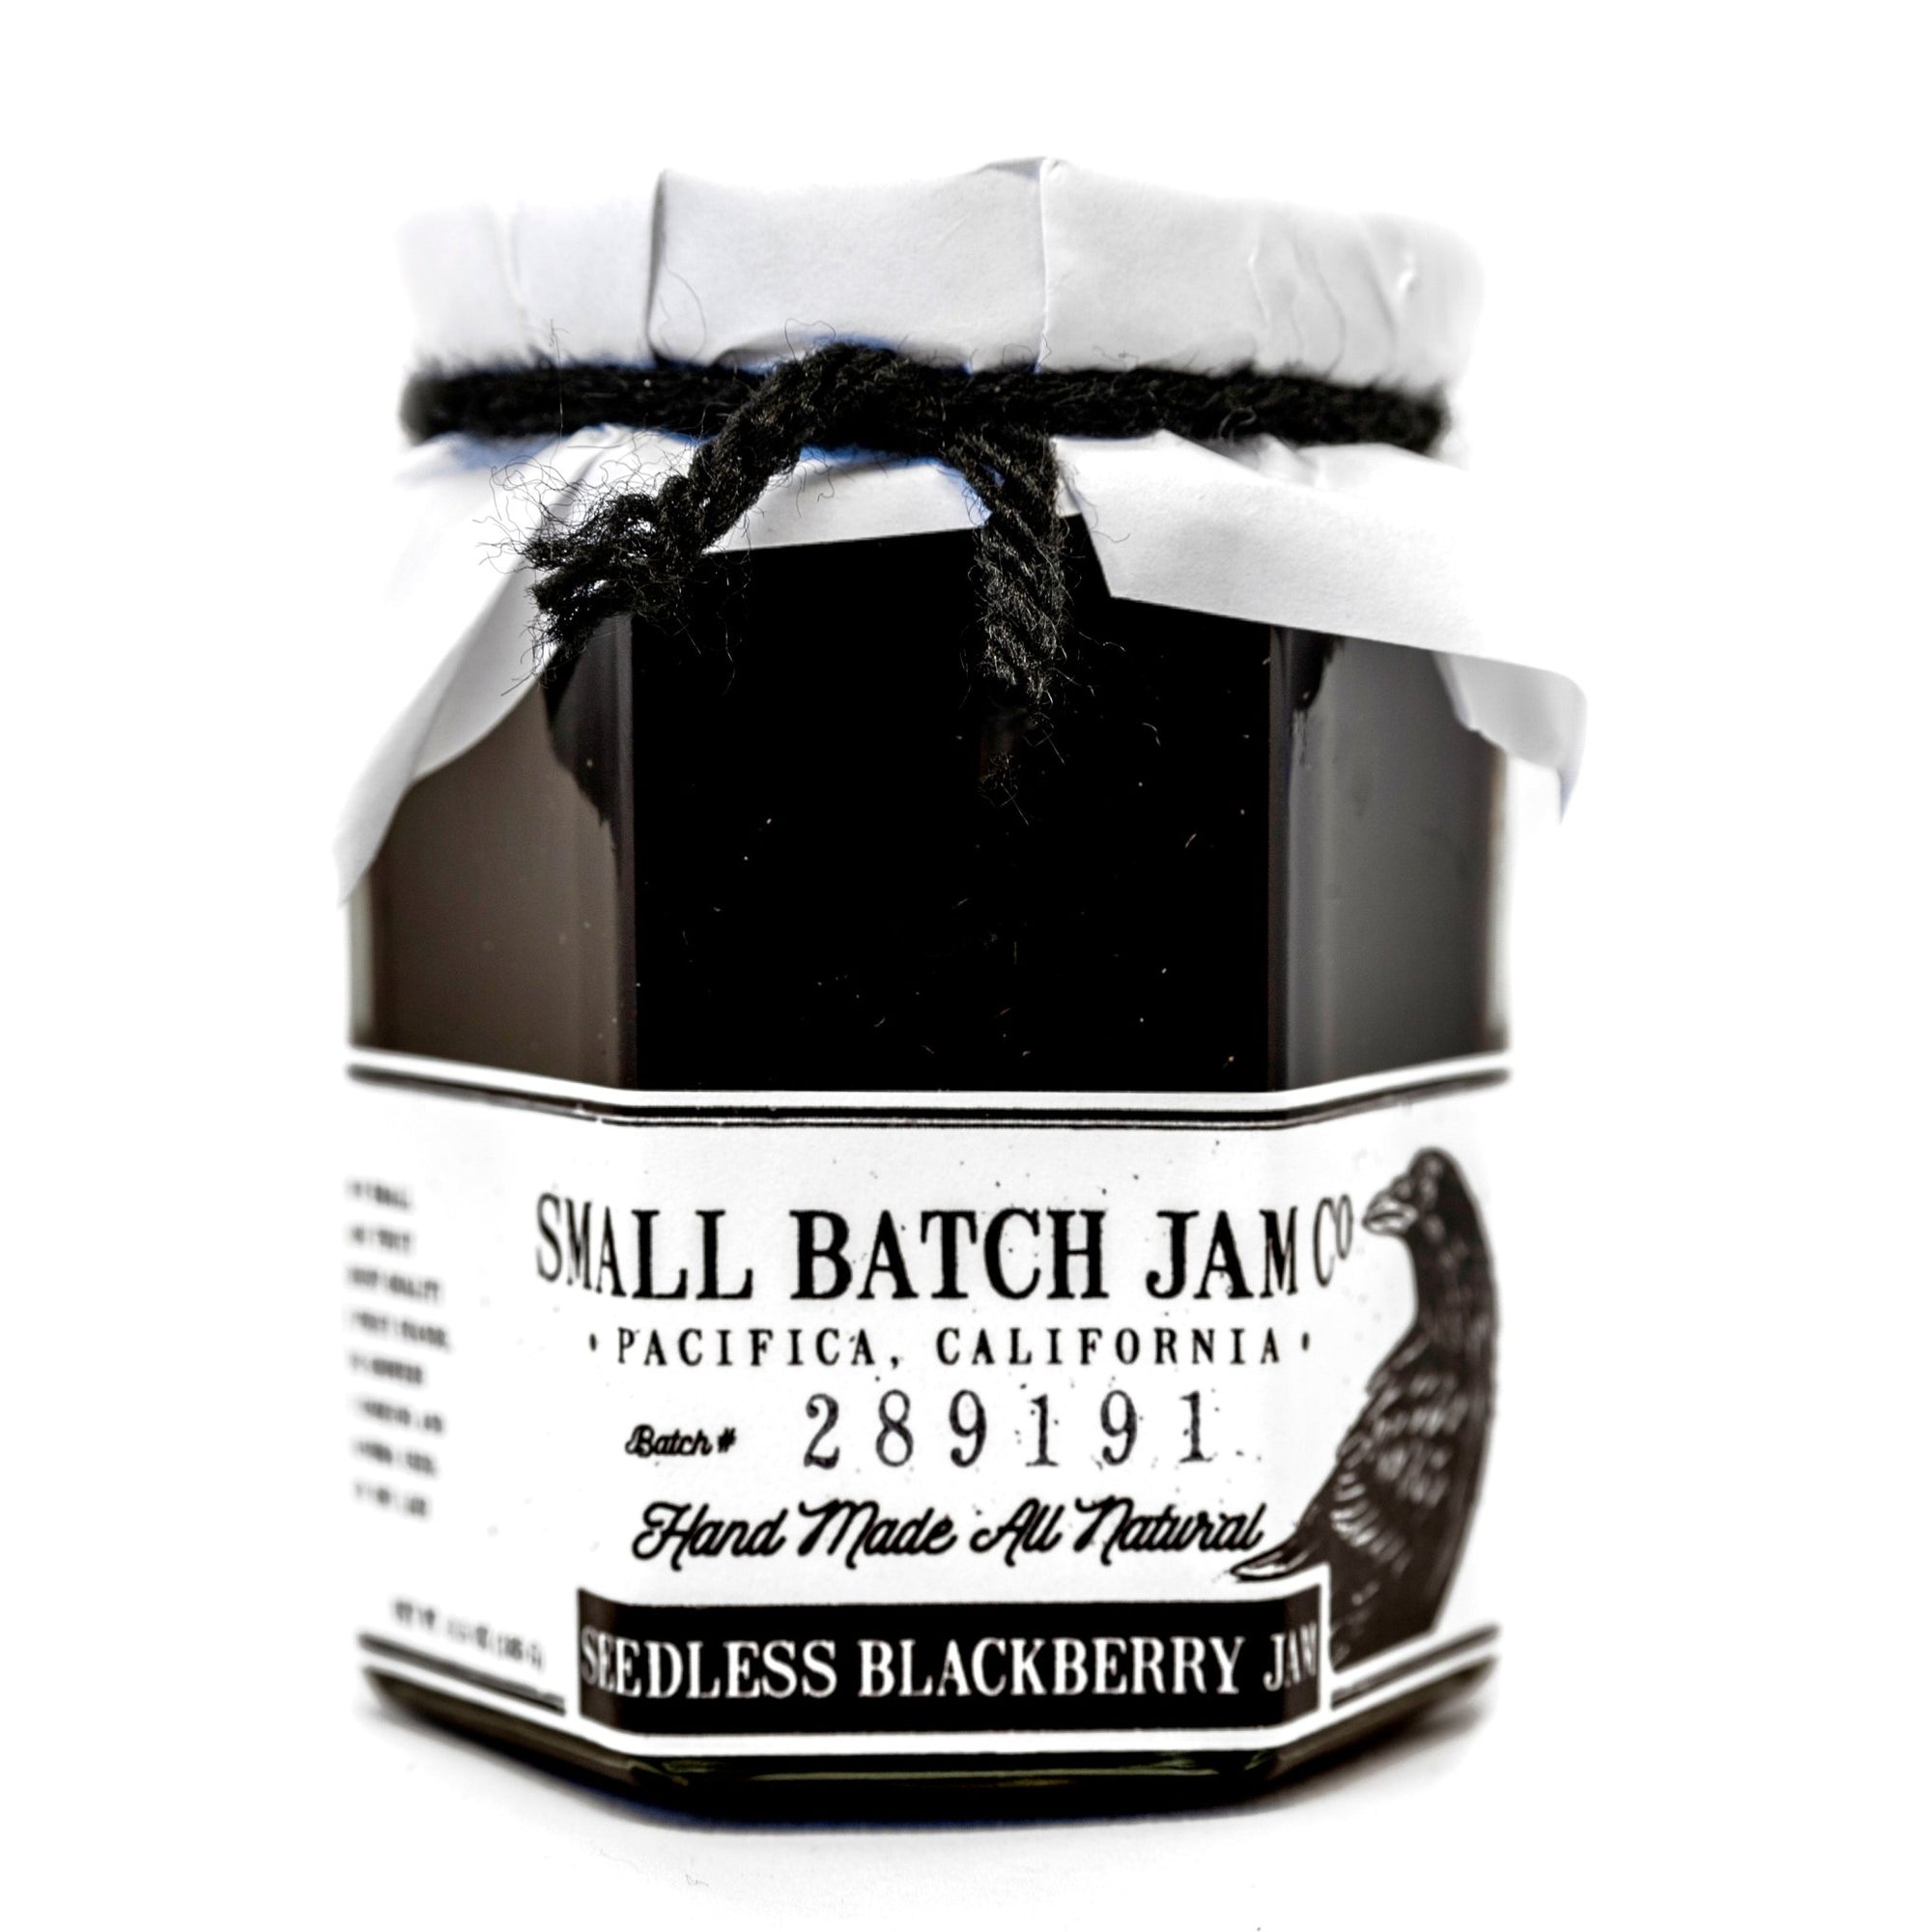 Seedless Blackberry Jam - Small Batch Jam Co